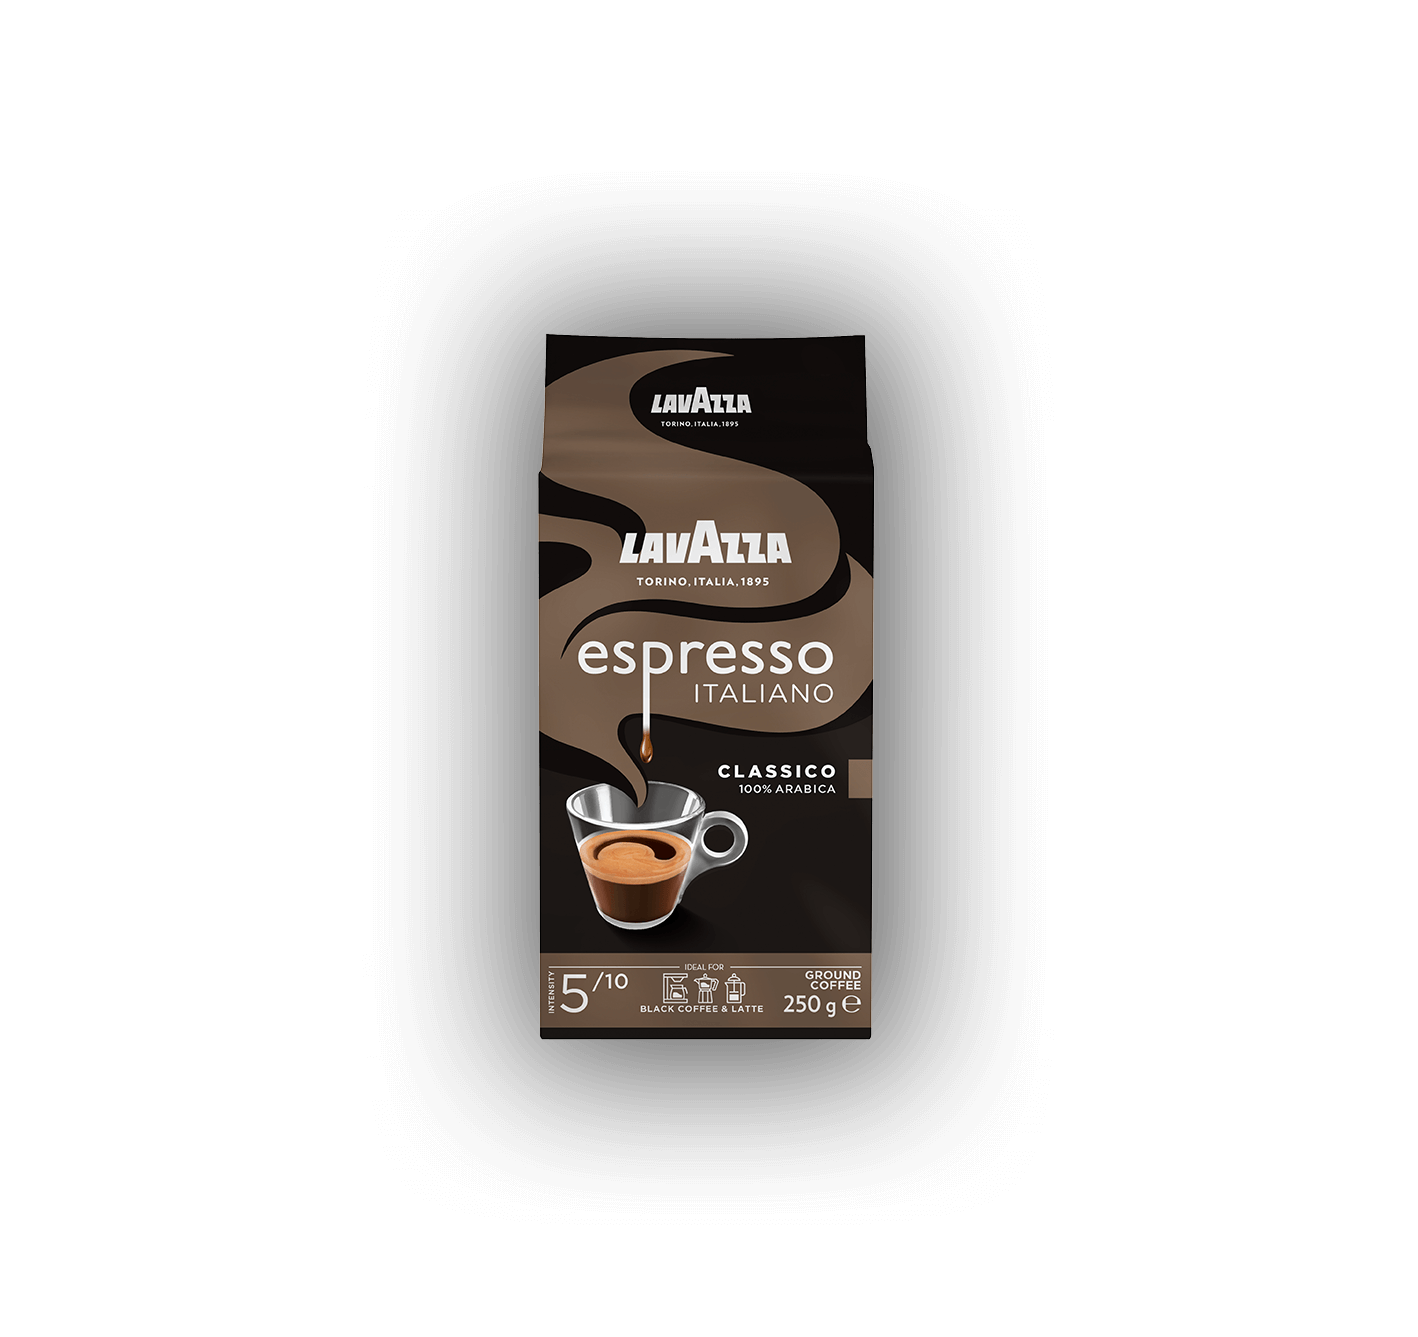 https://www.lavazza.ch/content/dam/lavazza-athena/b2c/pdp-pag-prodotto/coffee/hero-product-banner/2-main-asset-coffee/espresso/3938-d-espresso_classico-ground.png